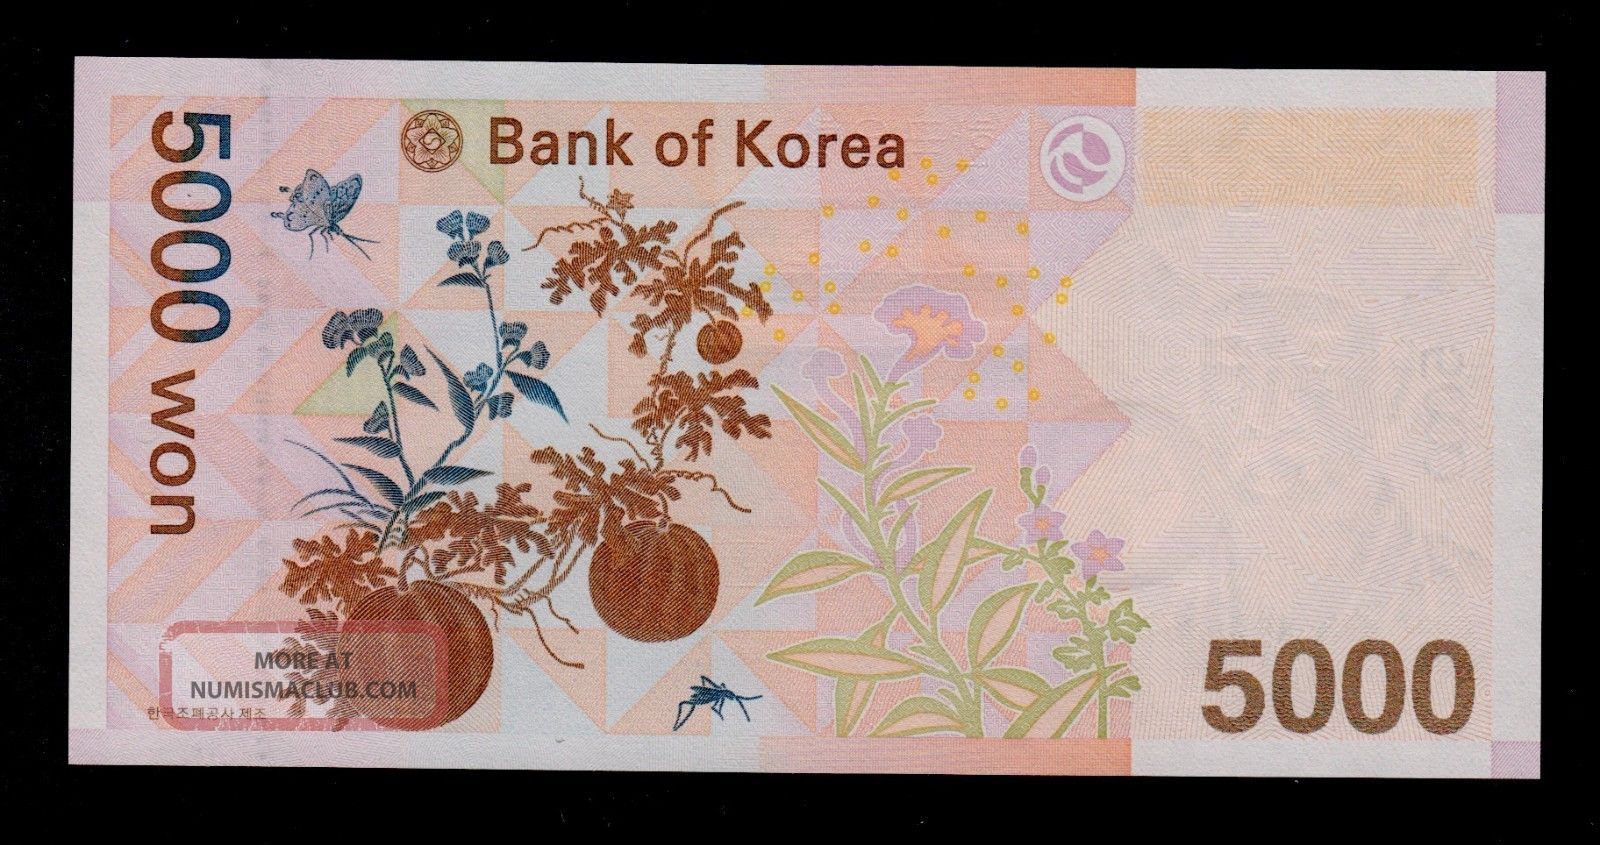 http://numismaclub.com/imgs/a/c/g/b/s/korea_south_5000_won_2006_pick_55a_unc__2_lgw.jpg